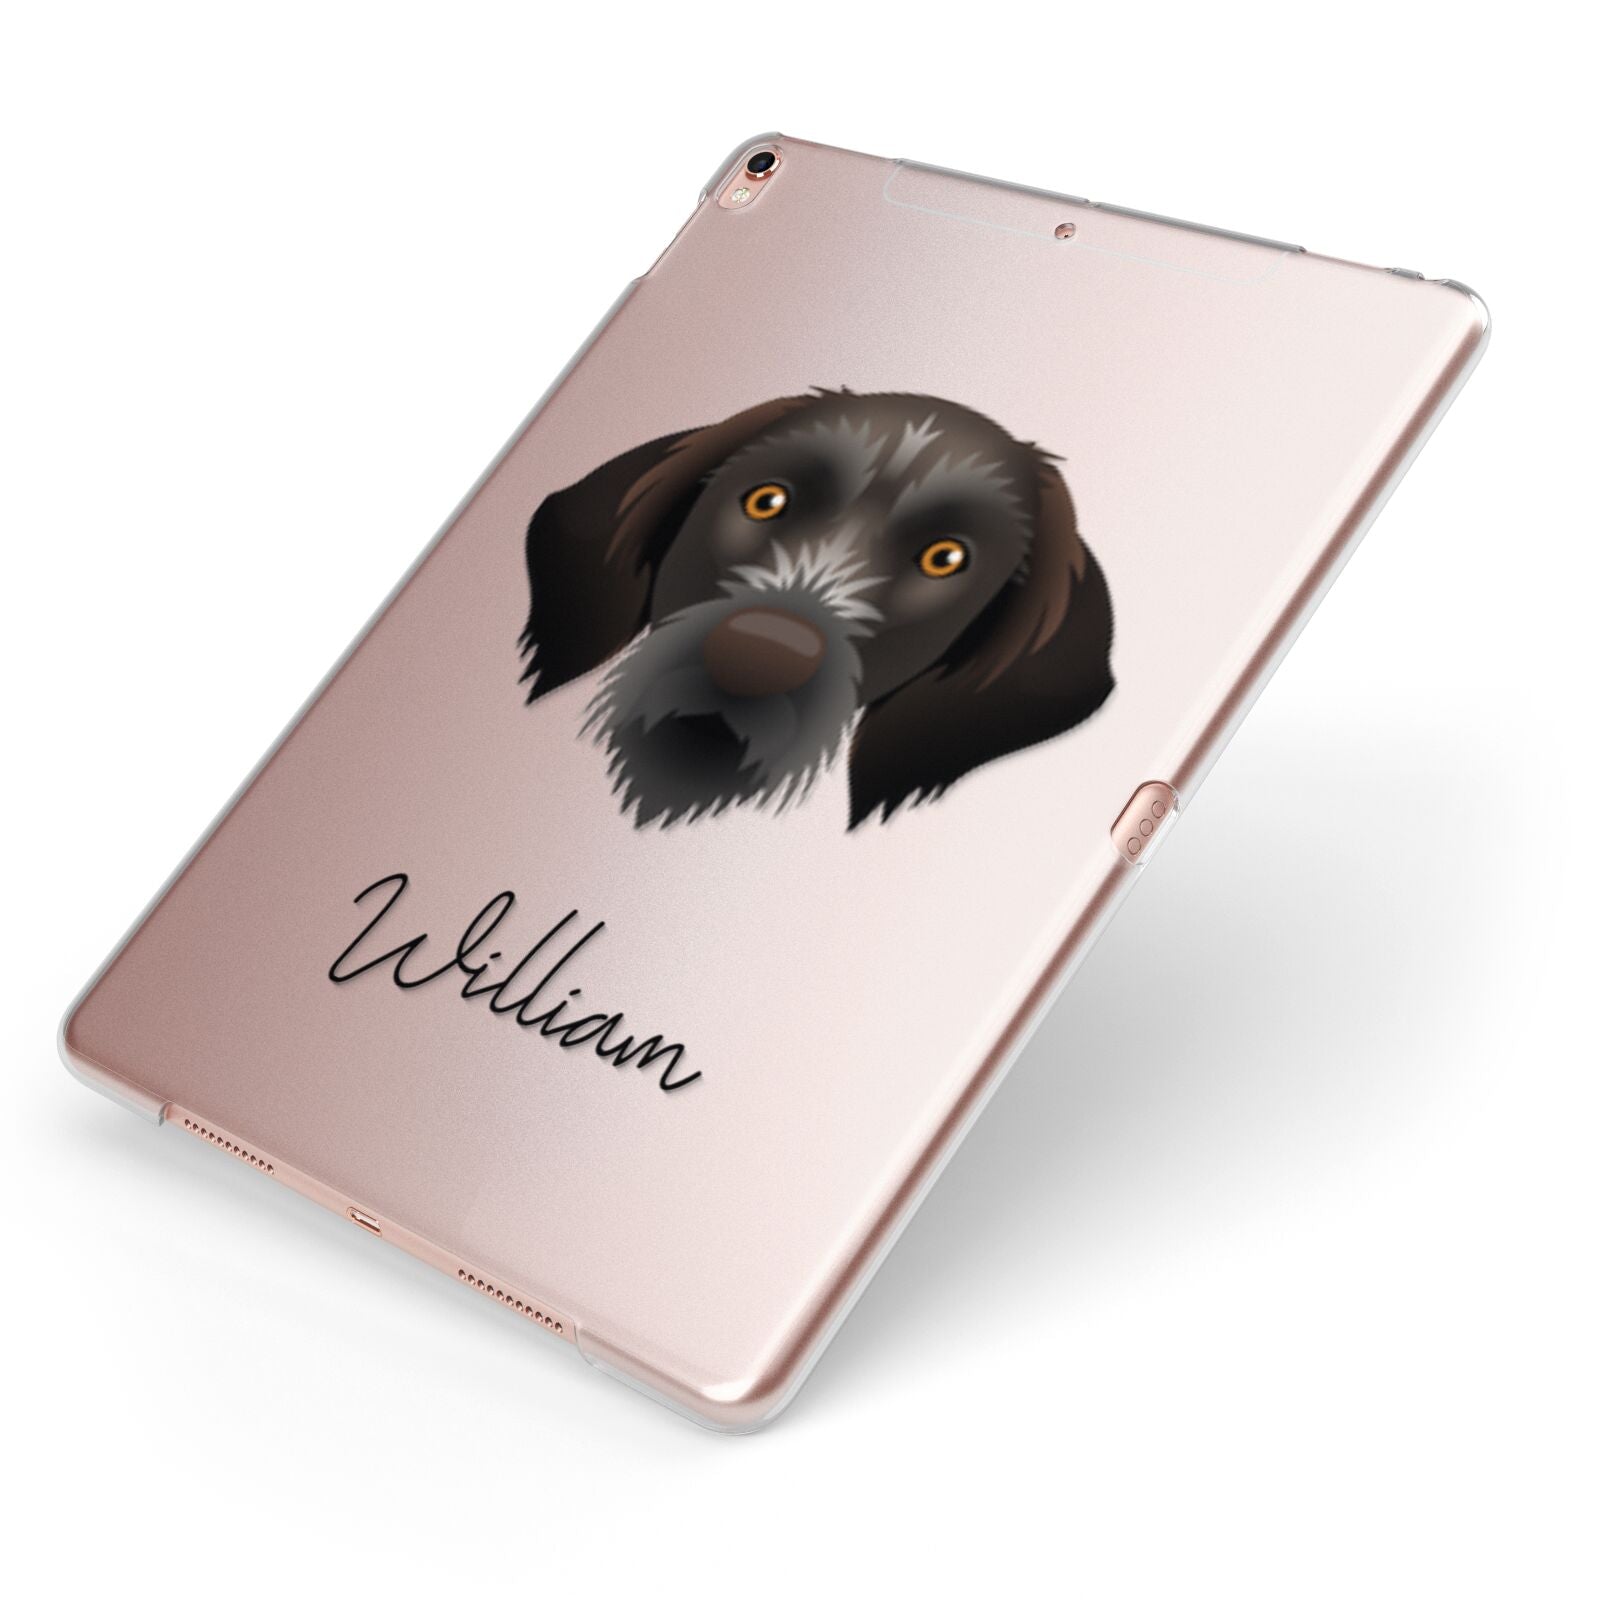 Korthals Griffon Personalised Apple iPad Case on Rose Gold iPad Side View